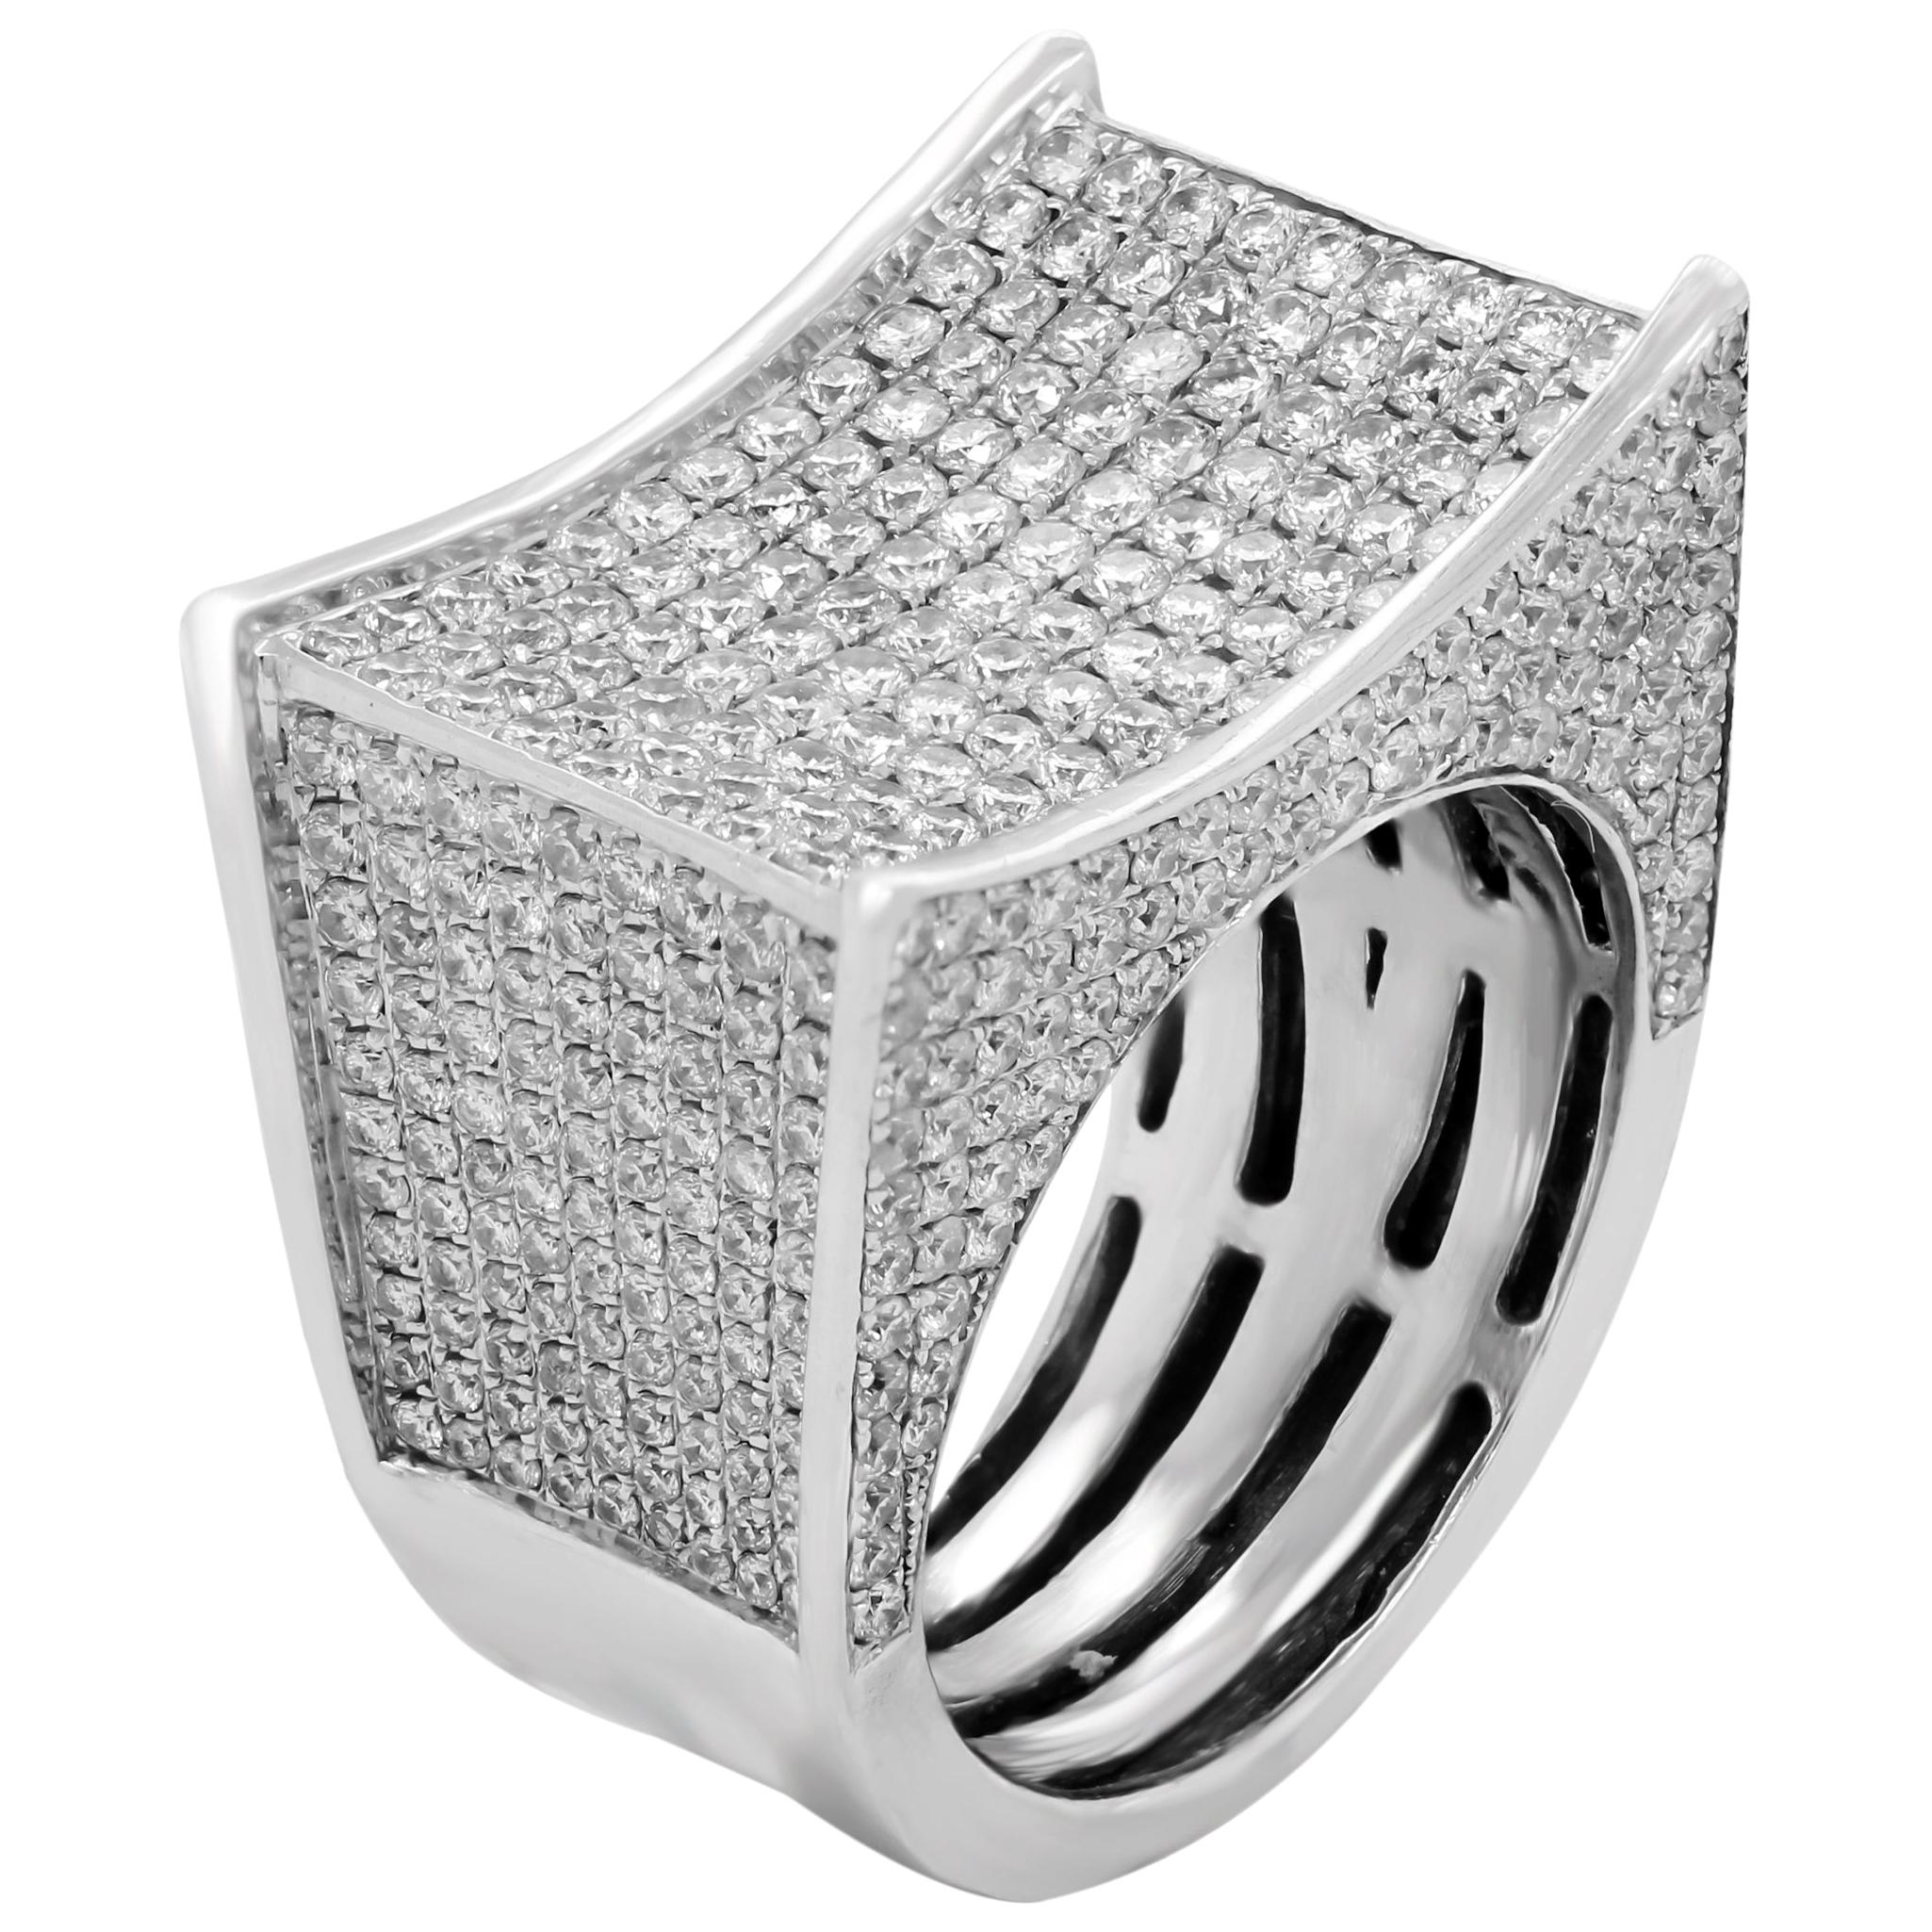 18 Karat White Gold and Micro Pavé Set Diamond Men's Curved Dome Ring